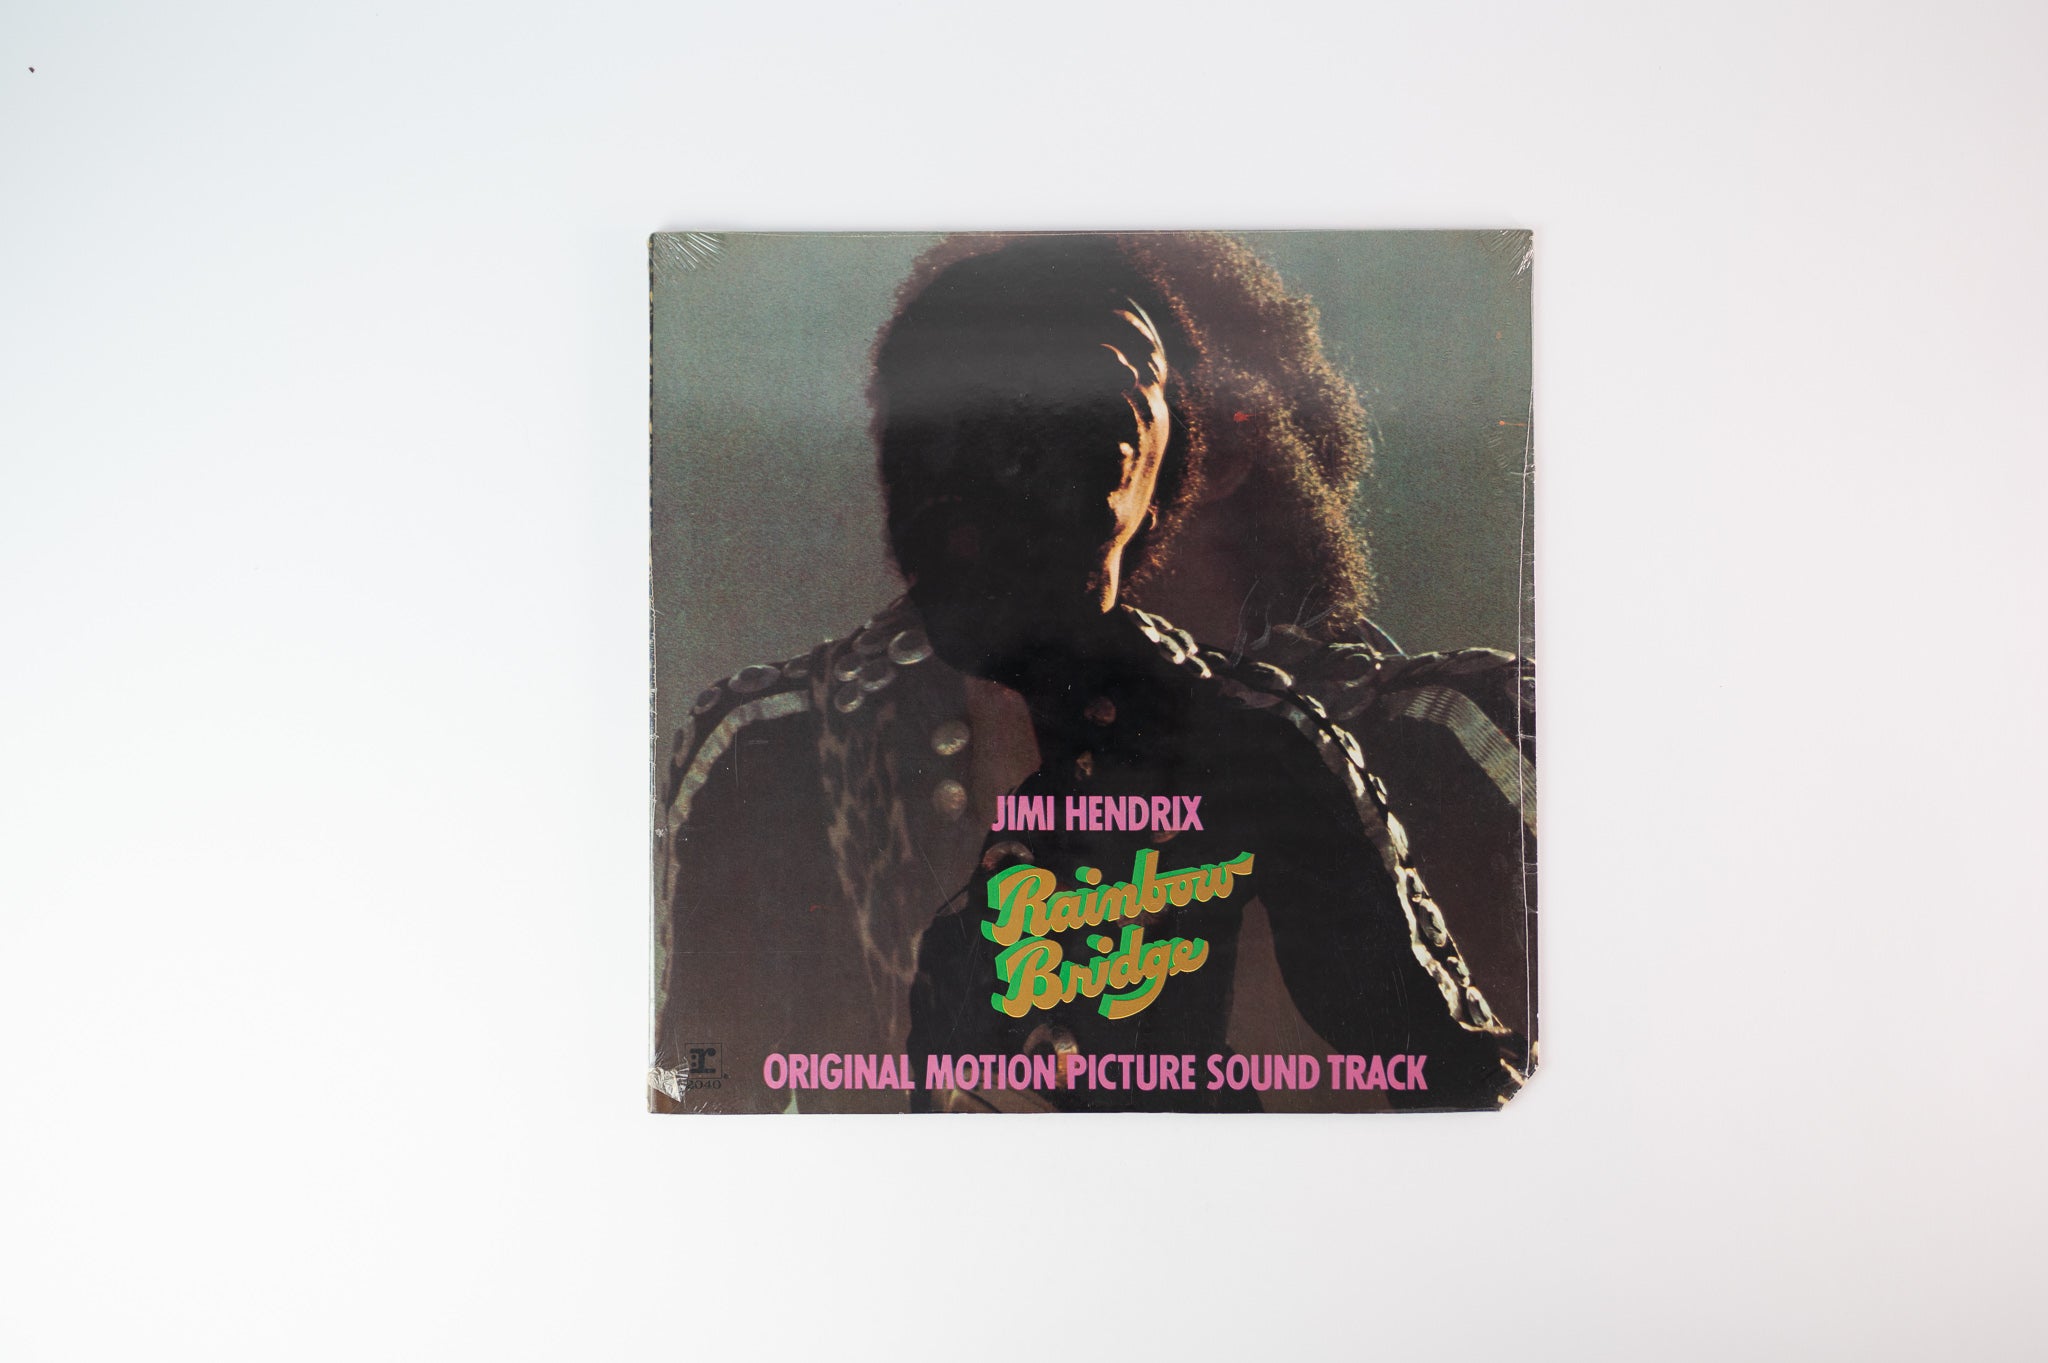 Jimi Hendrix - Rainbow Bridge / Original Motion Picture Sound Track on Reprise - Sealed